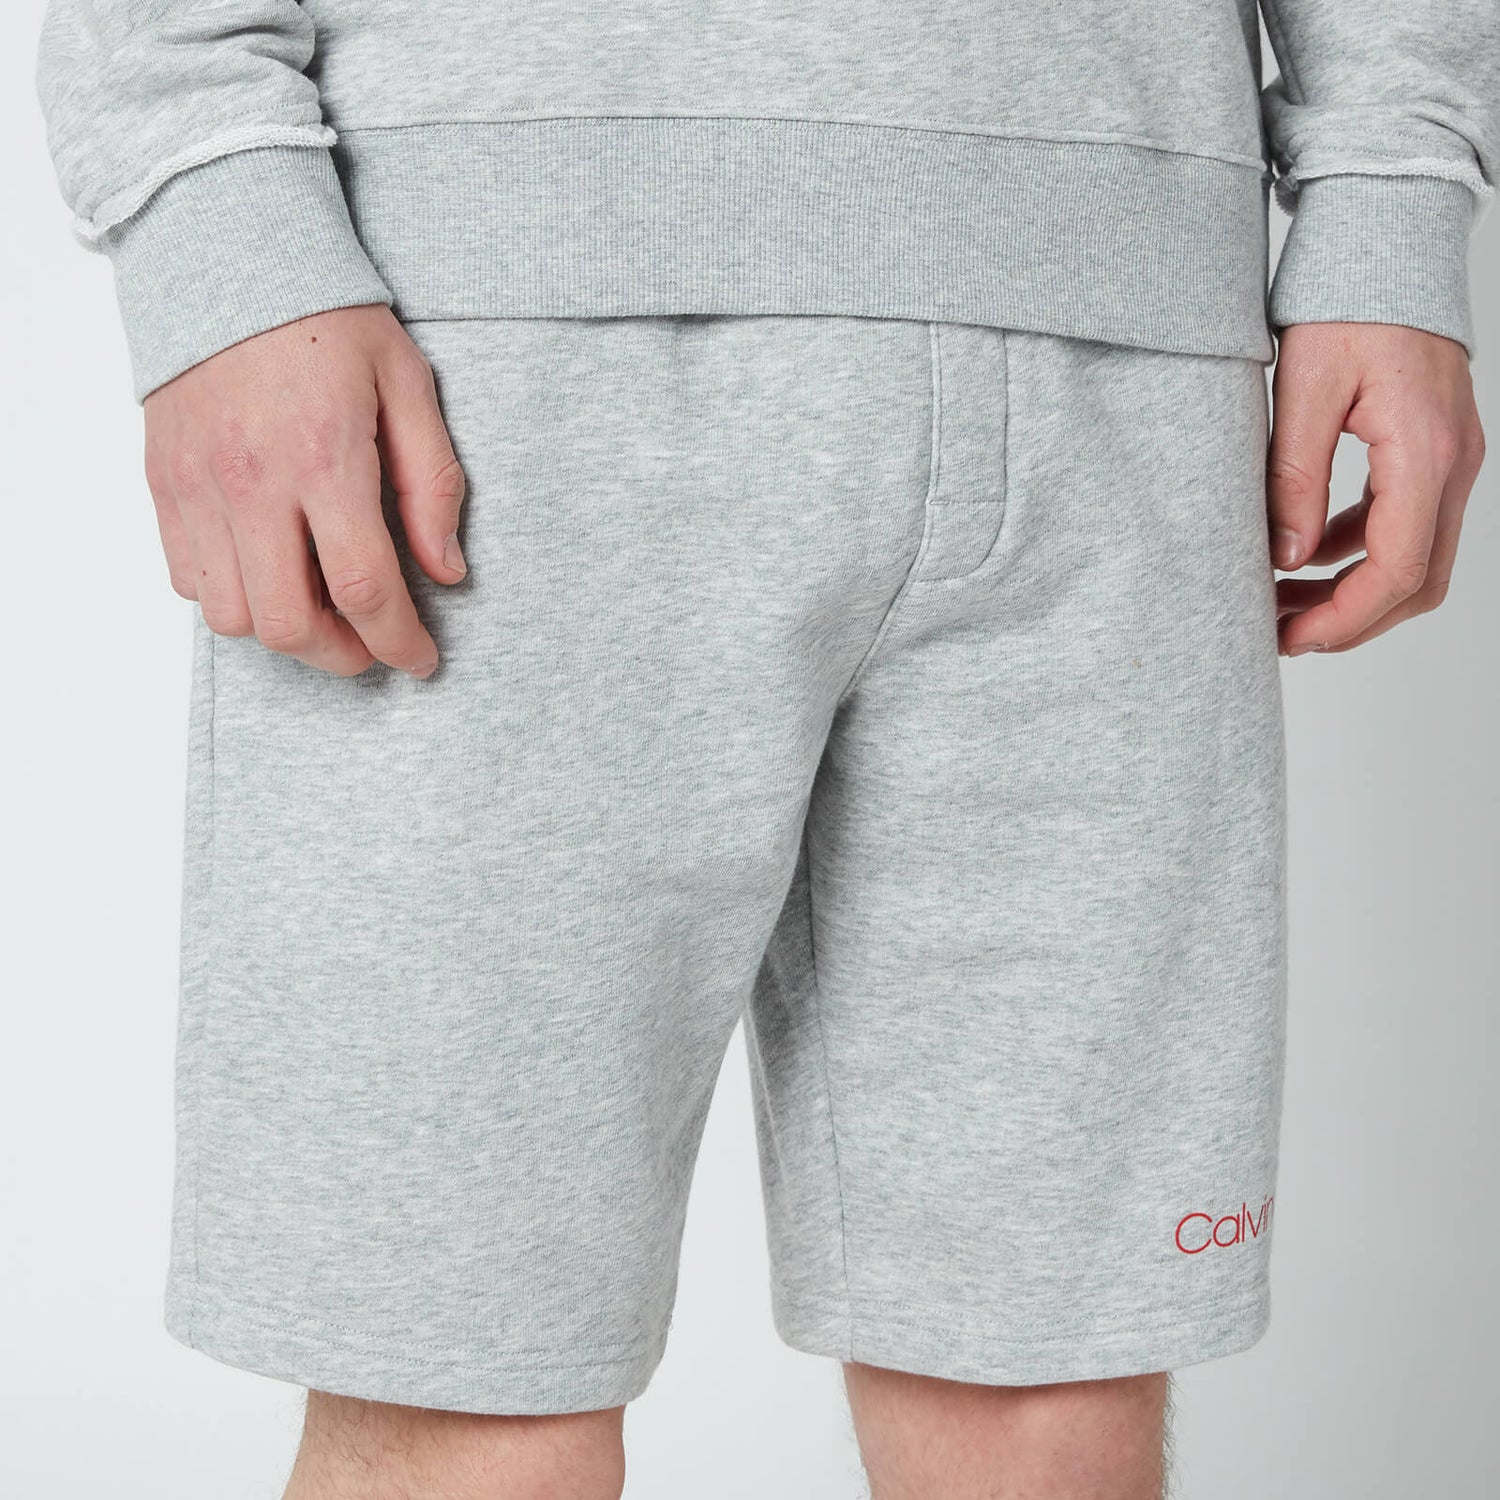 Calvin Klein Men's Sleep Shorts - Grey Heather